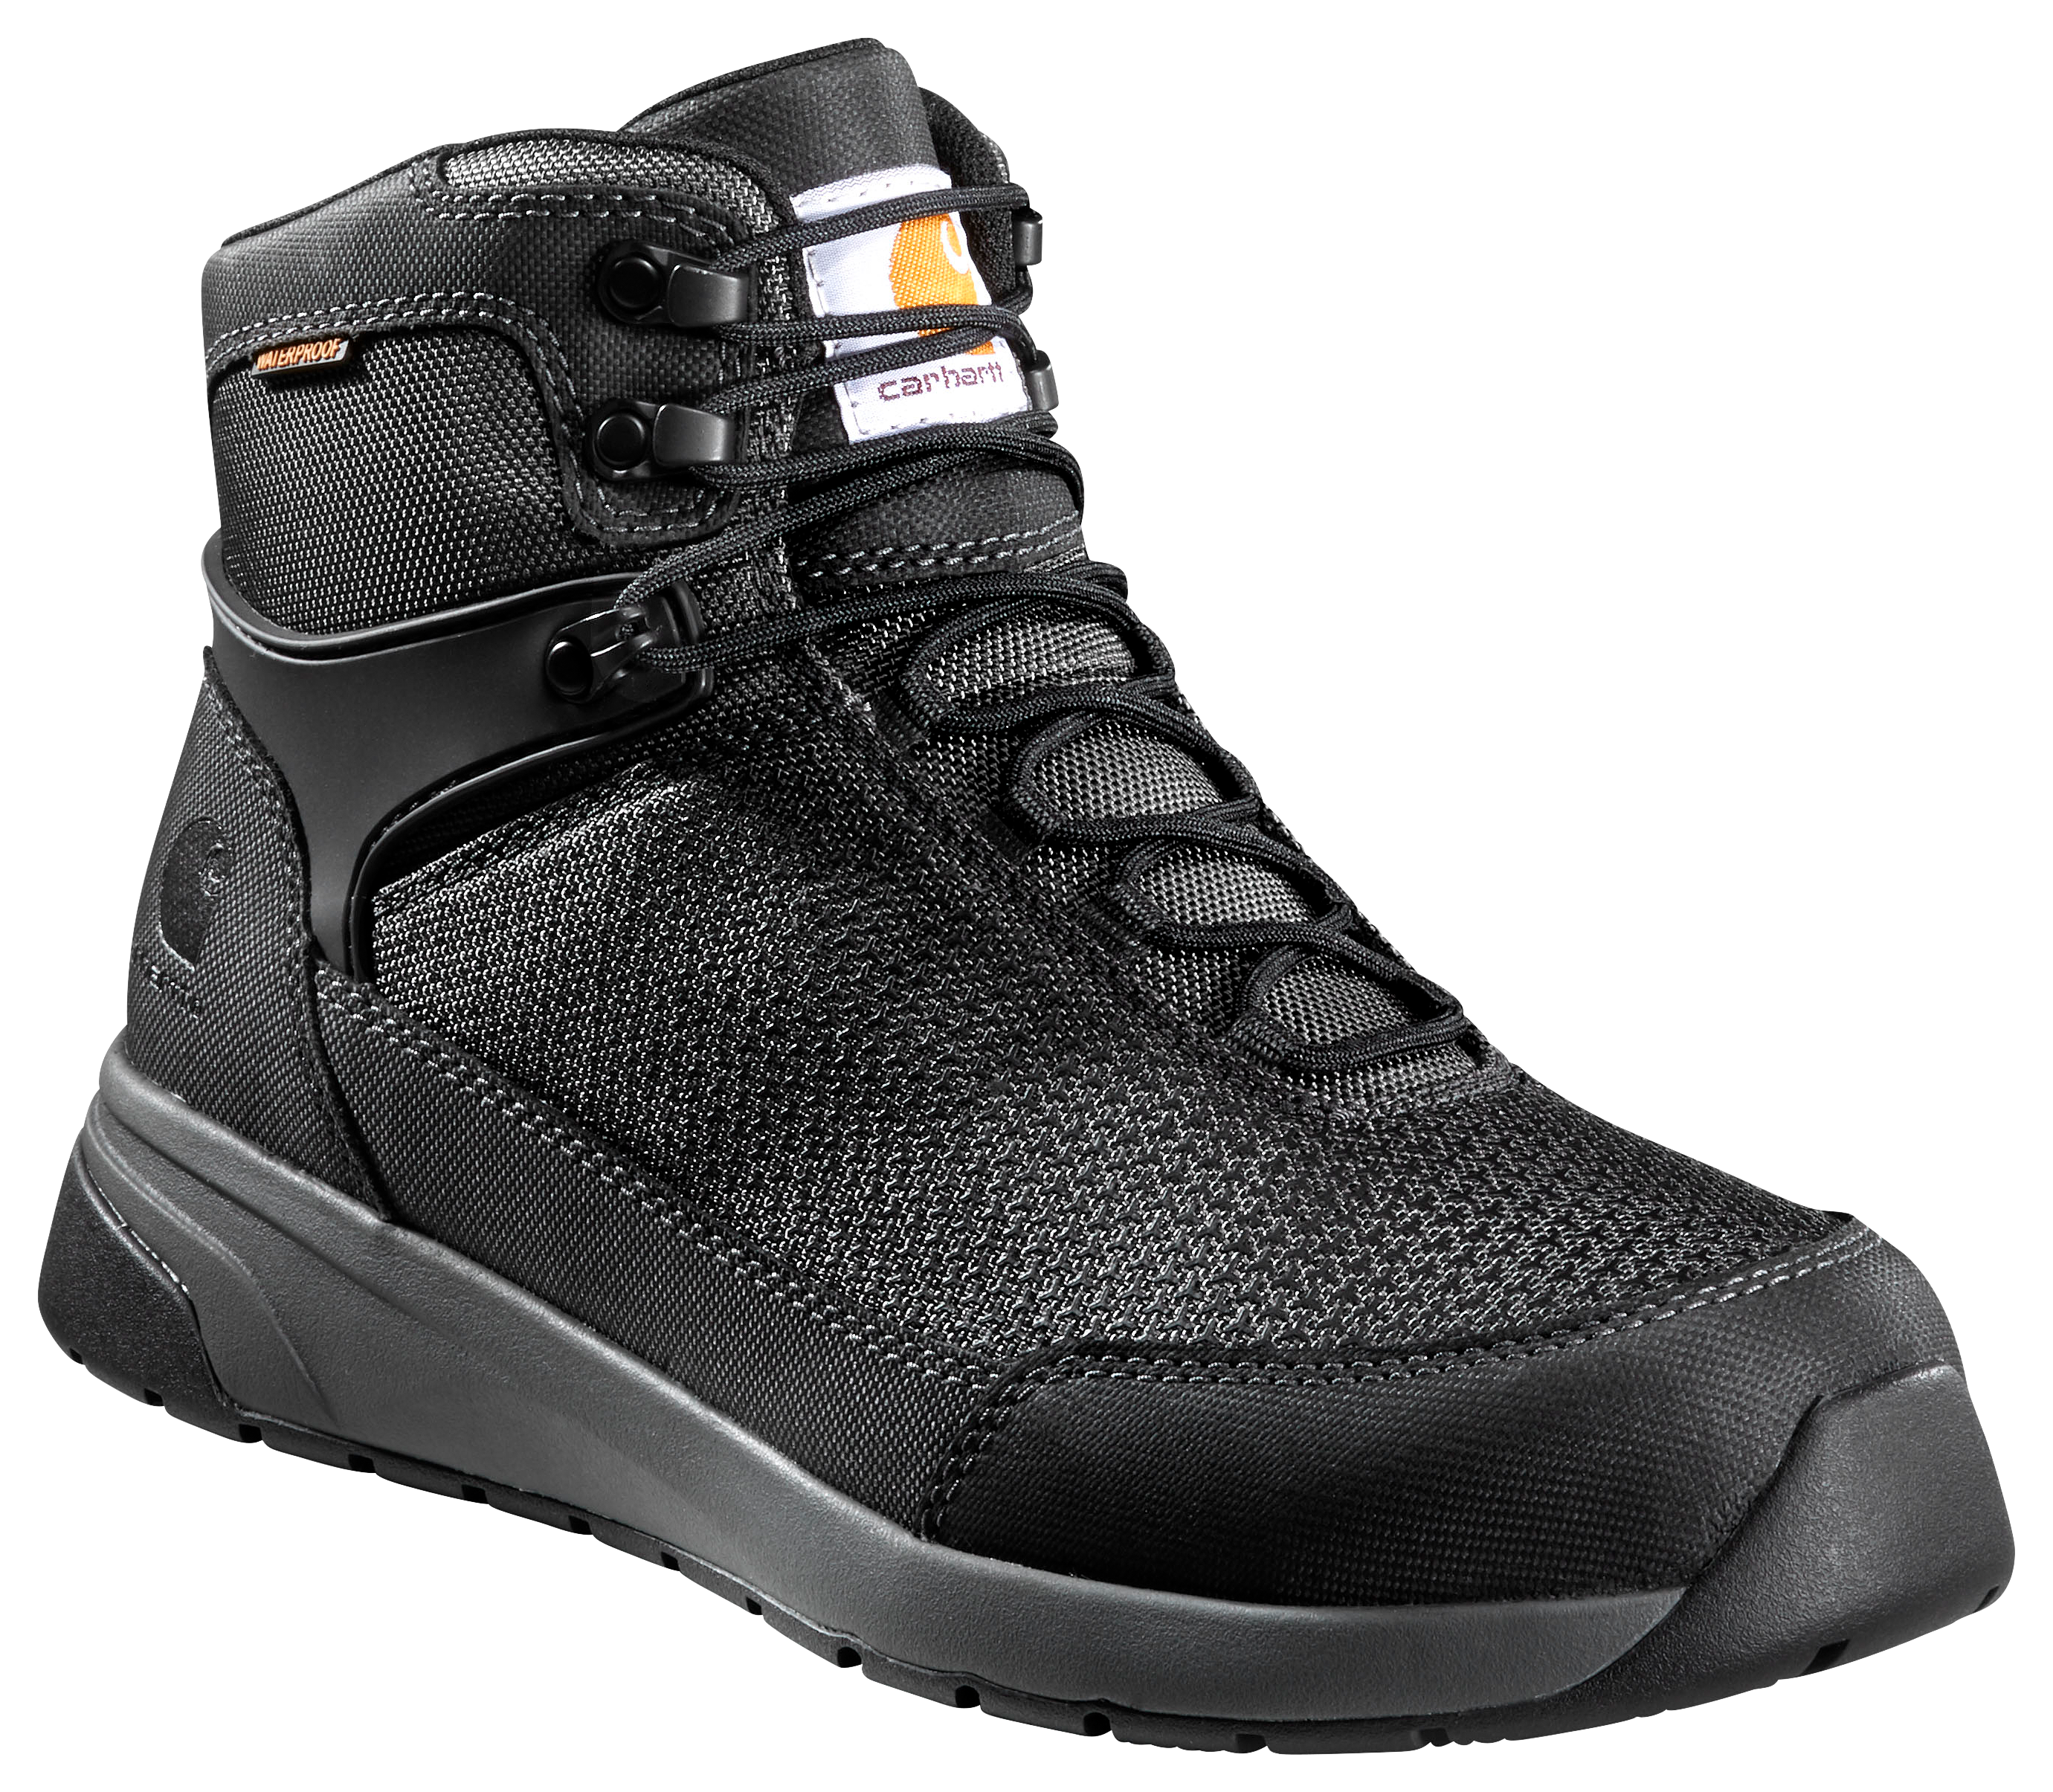 Carhartt Force 6"" Nano Composite-Toe Work Boots for Men - Black - 11W